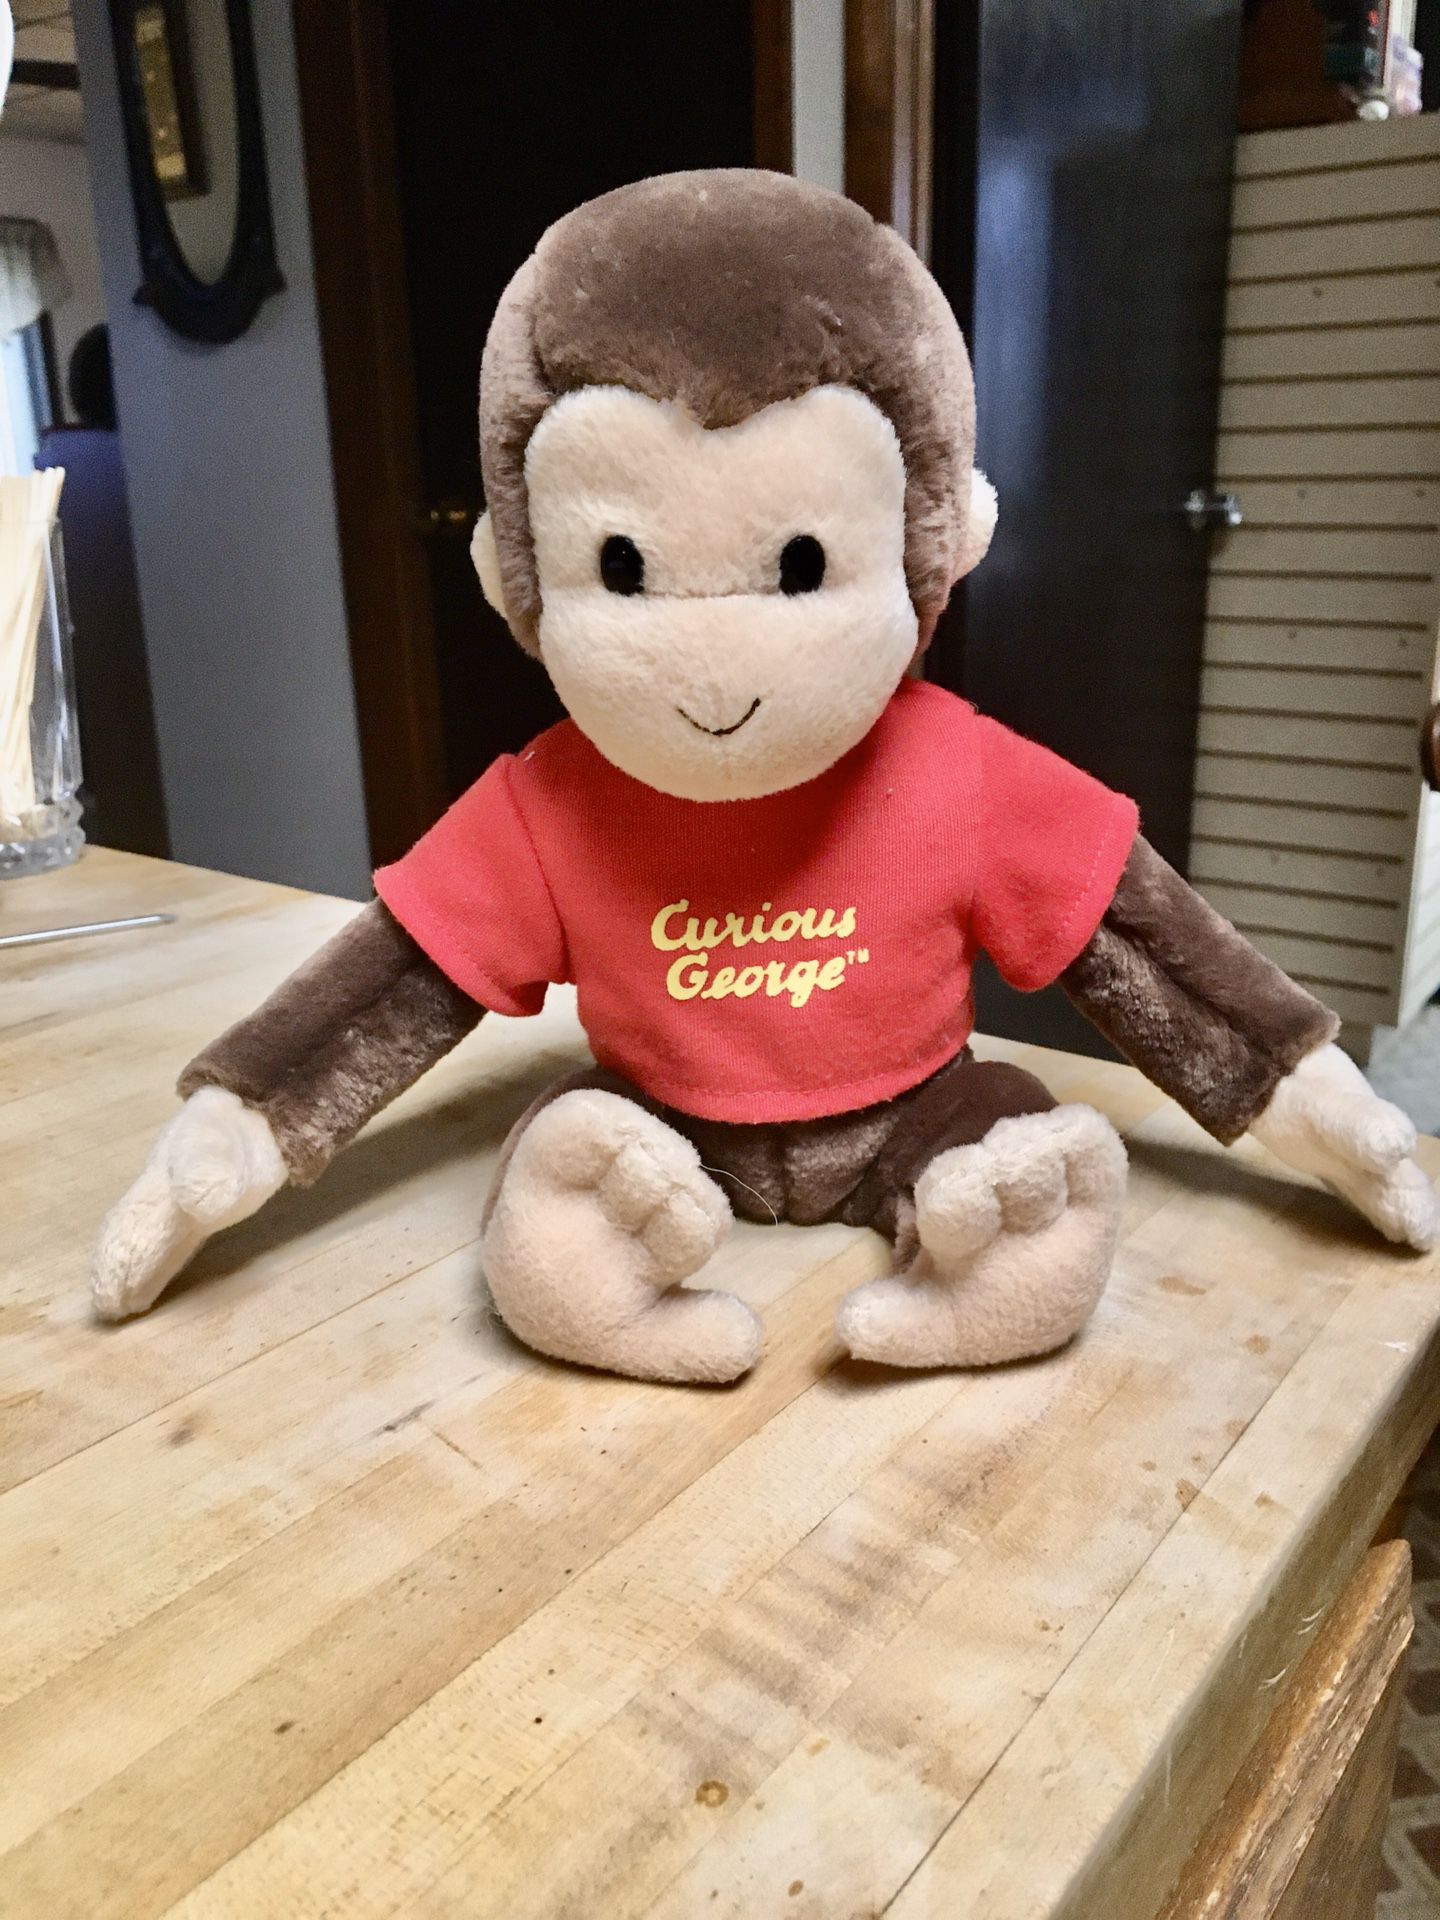 Curious George stuffed animal by Gund